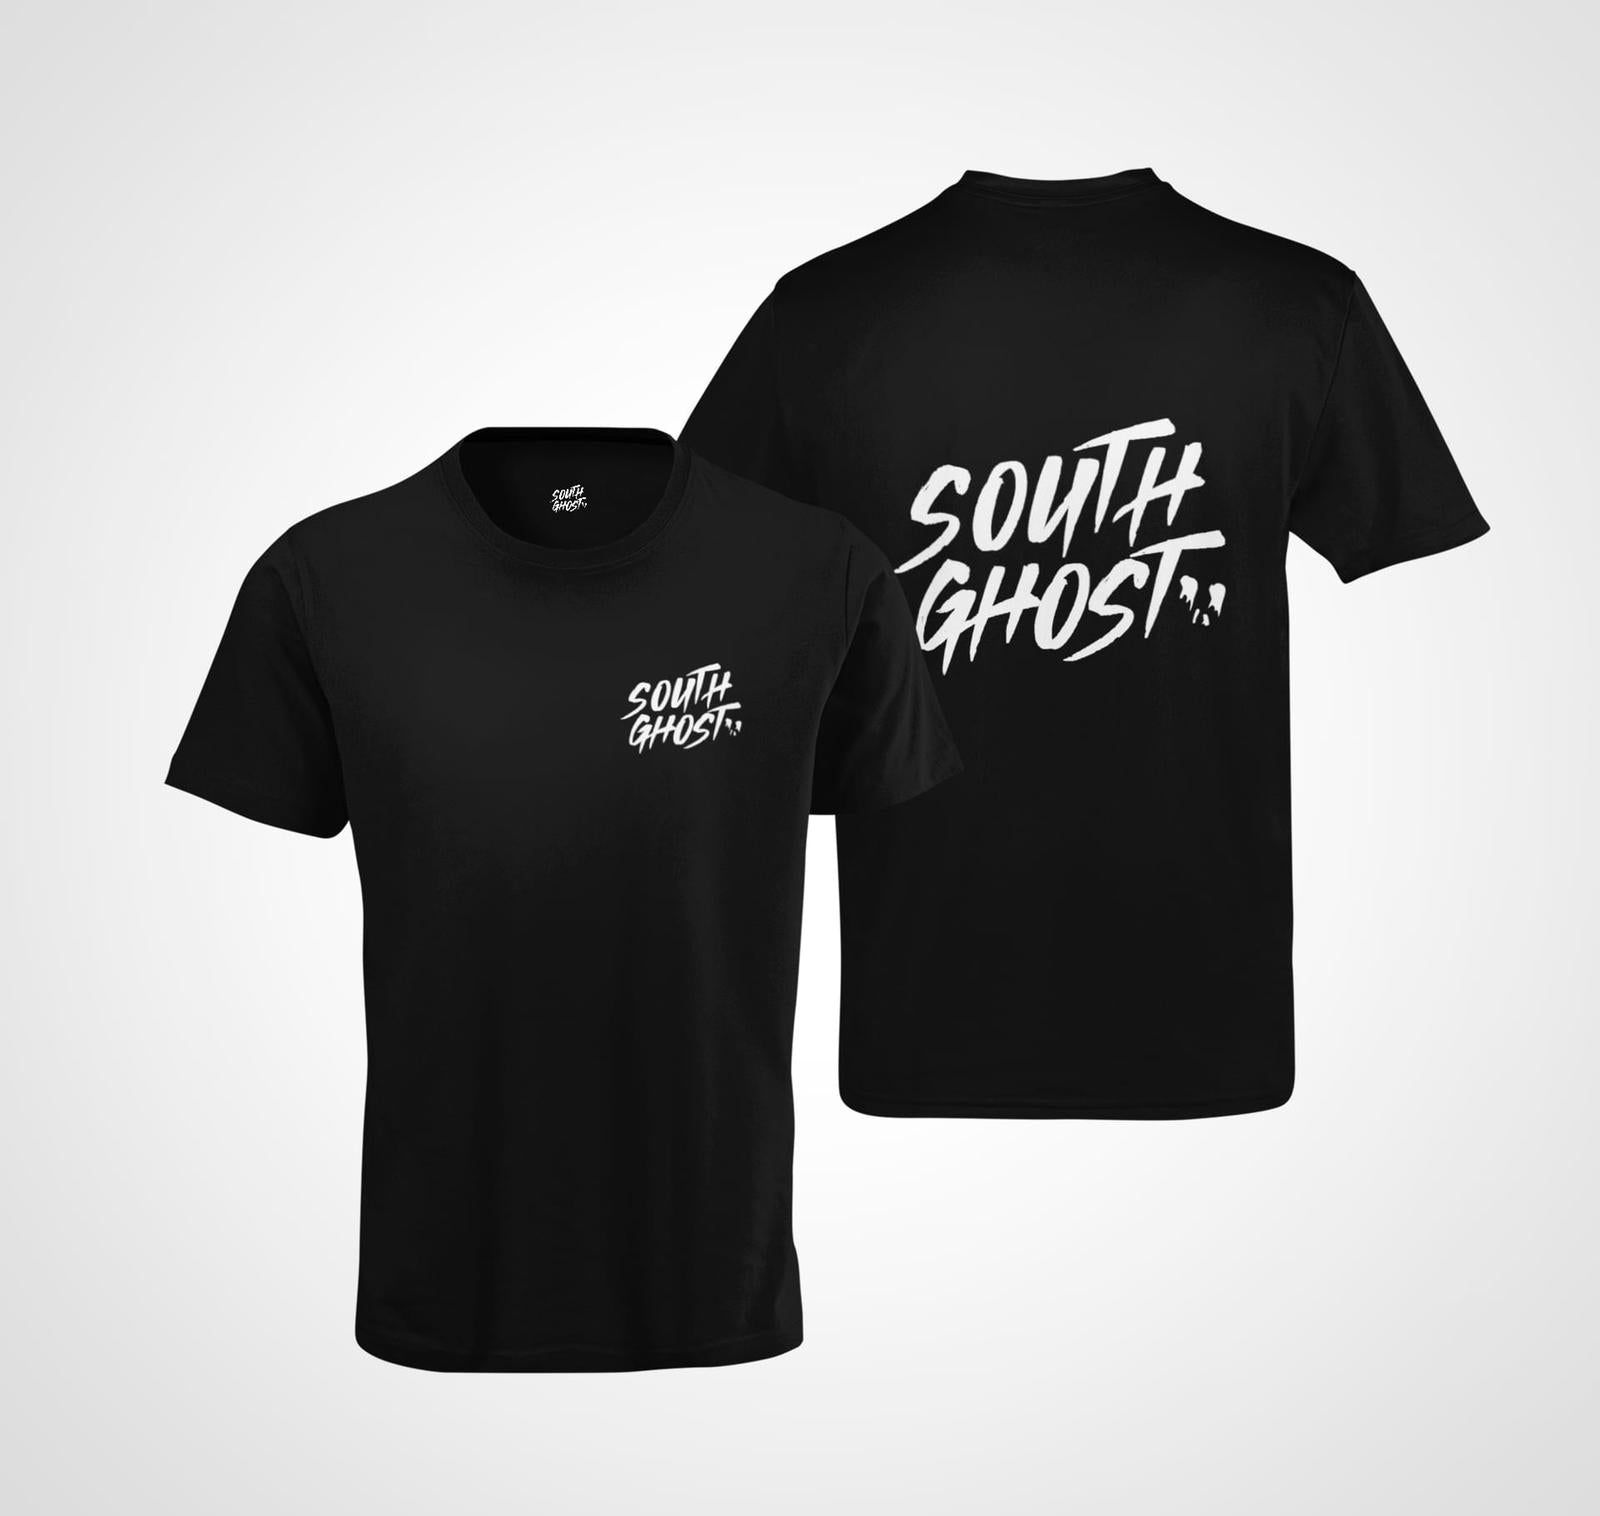 T-Shirt Rundhals "South Ghost TM"